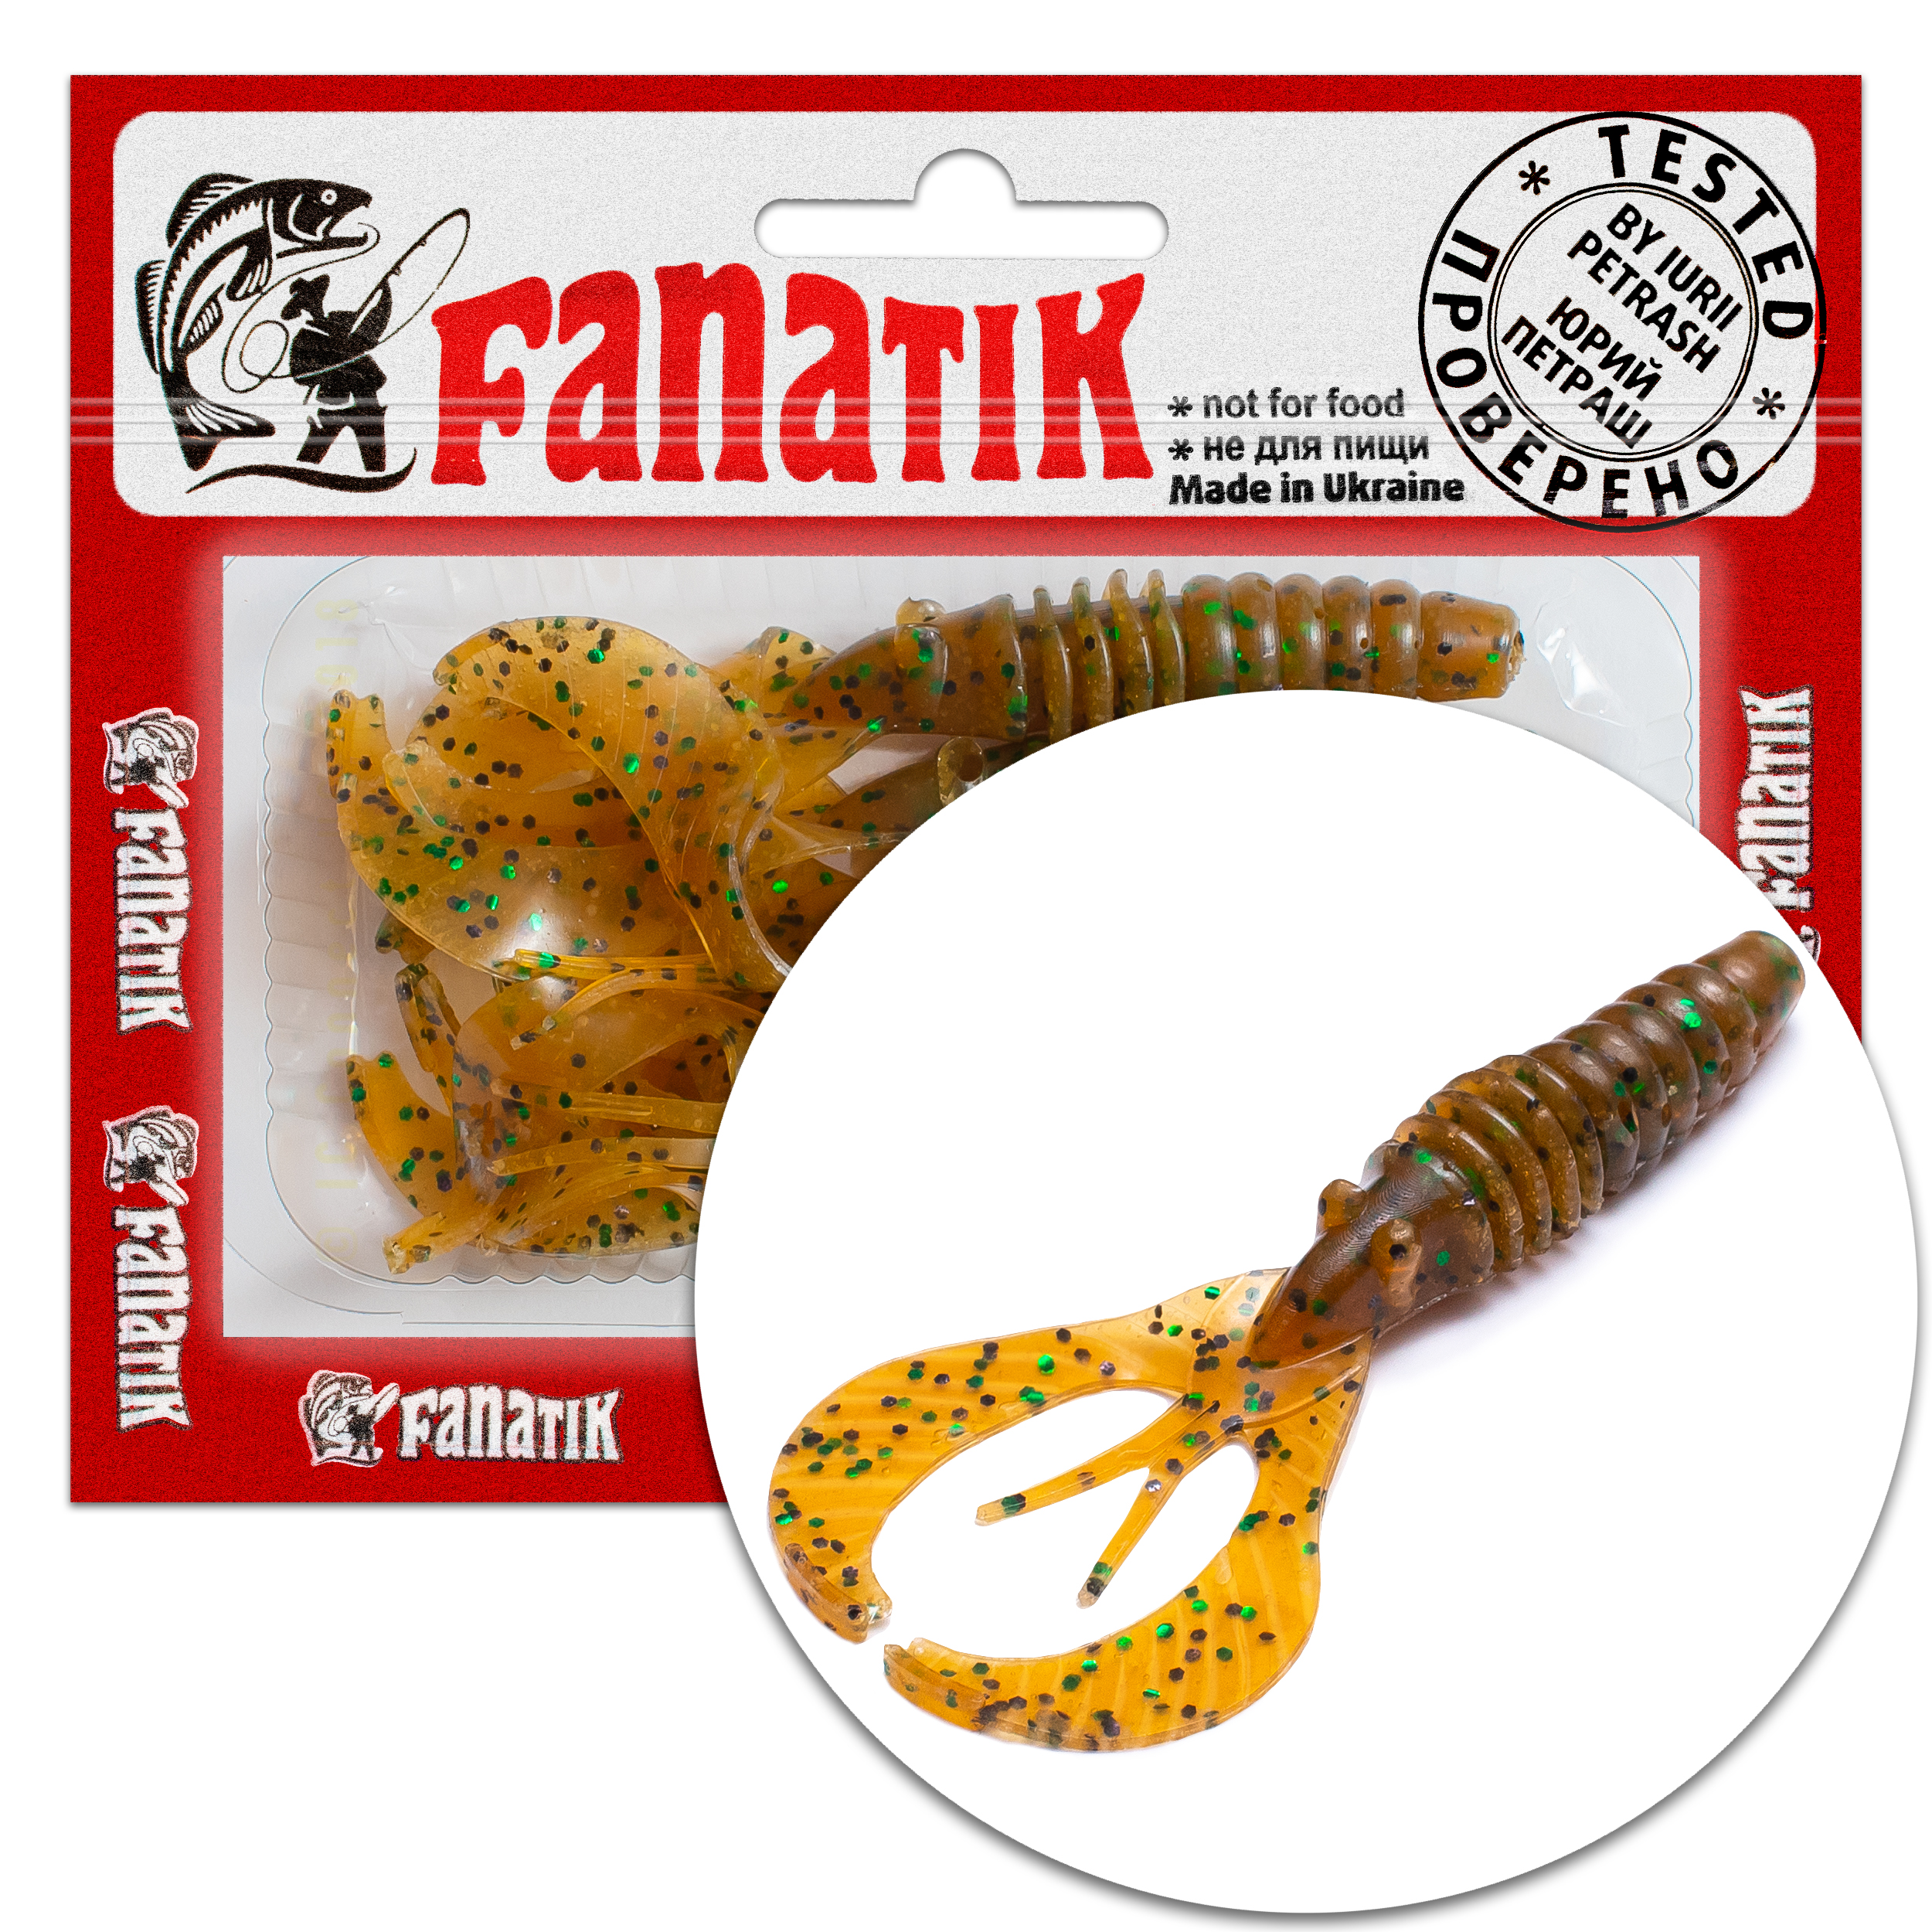 Fanatik LOBSTER - Active Shellfish Soft Plastic Fishing Baits and